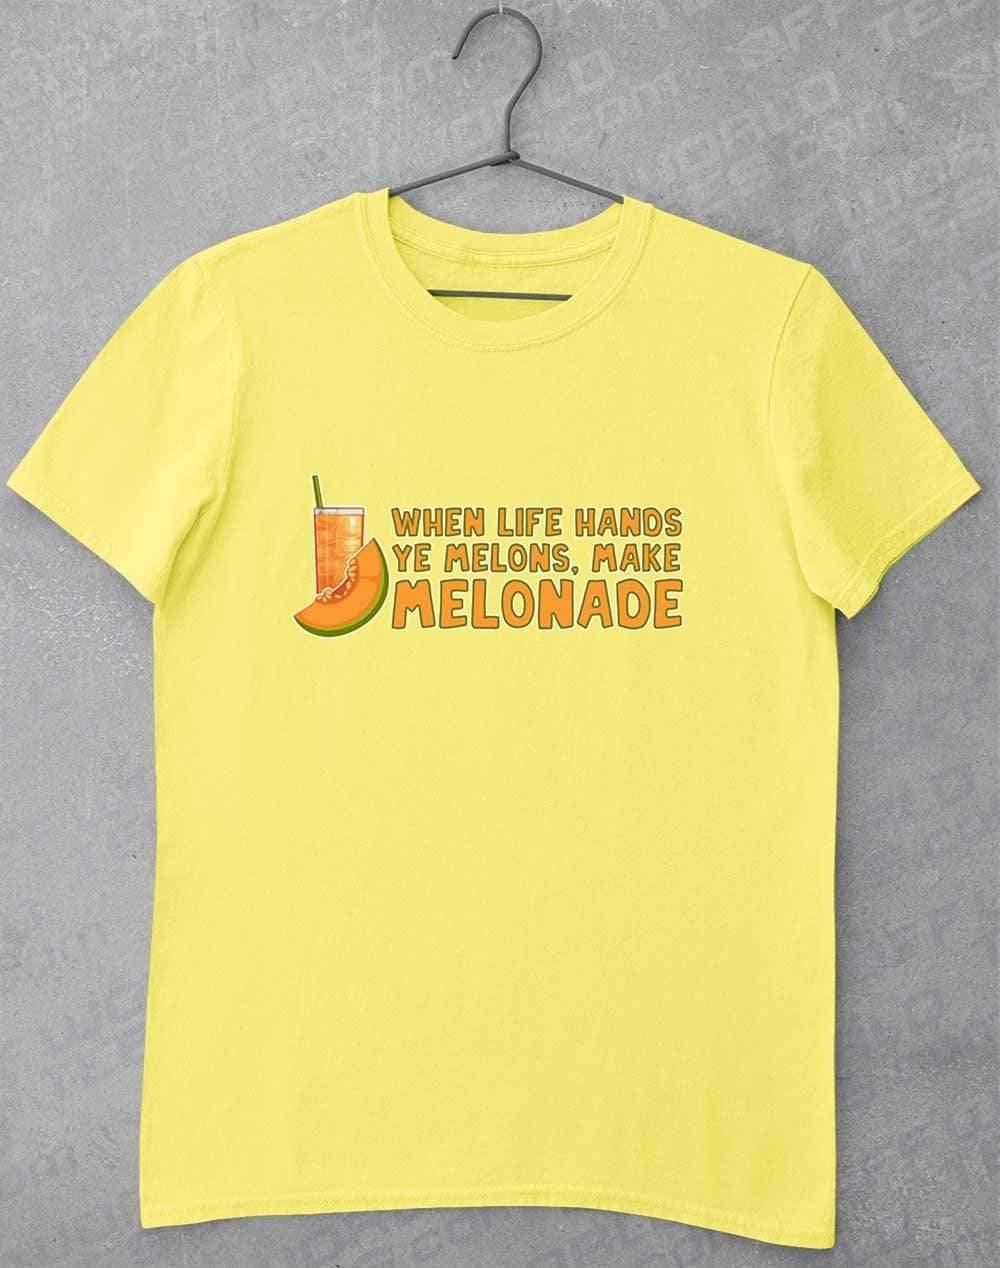 Make Melonade T-Shirt S / Cornsilk  - Off World Tees